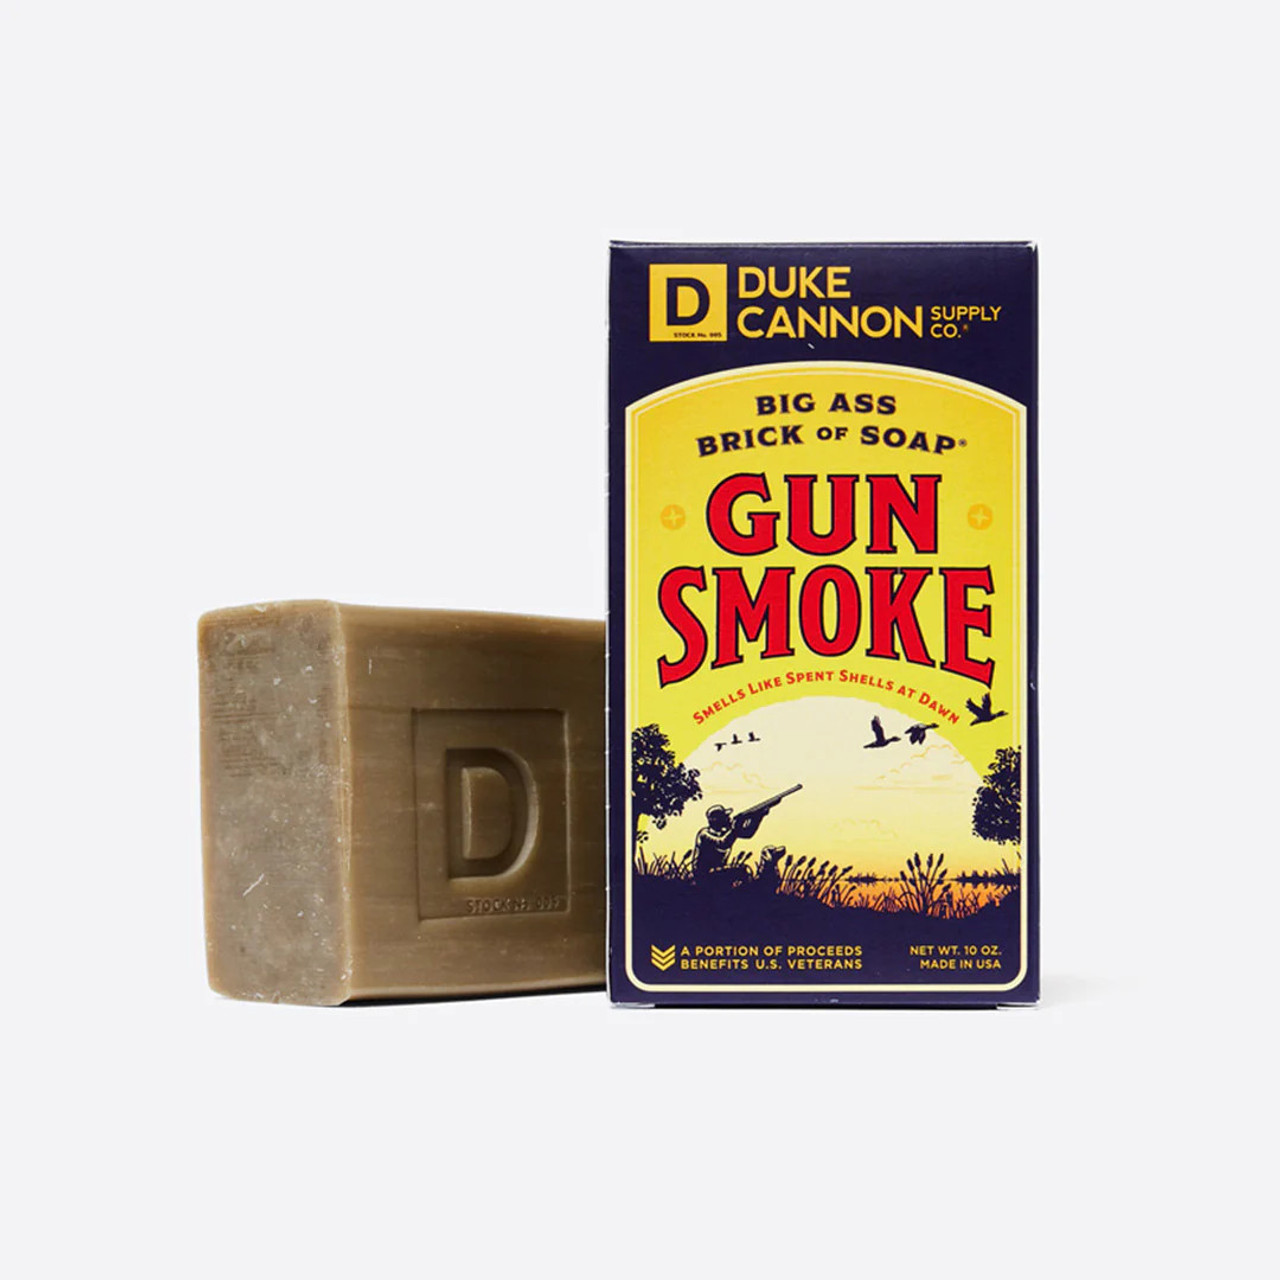 https://cdn11.bigcommerce.com/s-kk2jd0cxqh/images/stencil/1280x1280/products/18162/19044/duke-cannon-big-ass-brick-of-soap-gun-smoke__15754.1680929813.jpg?c=1